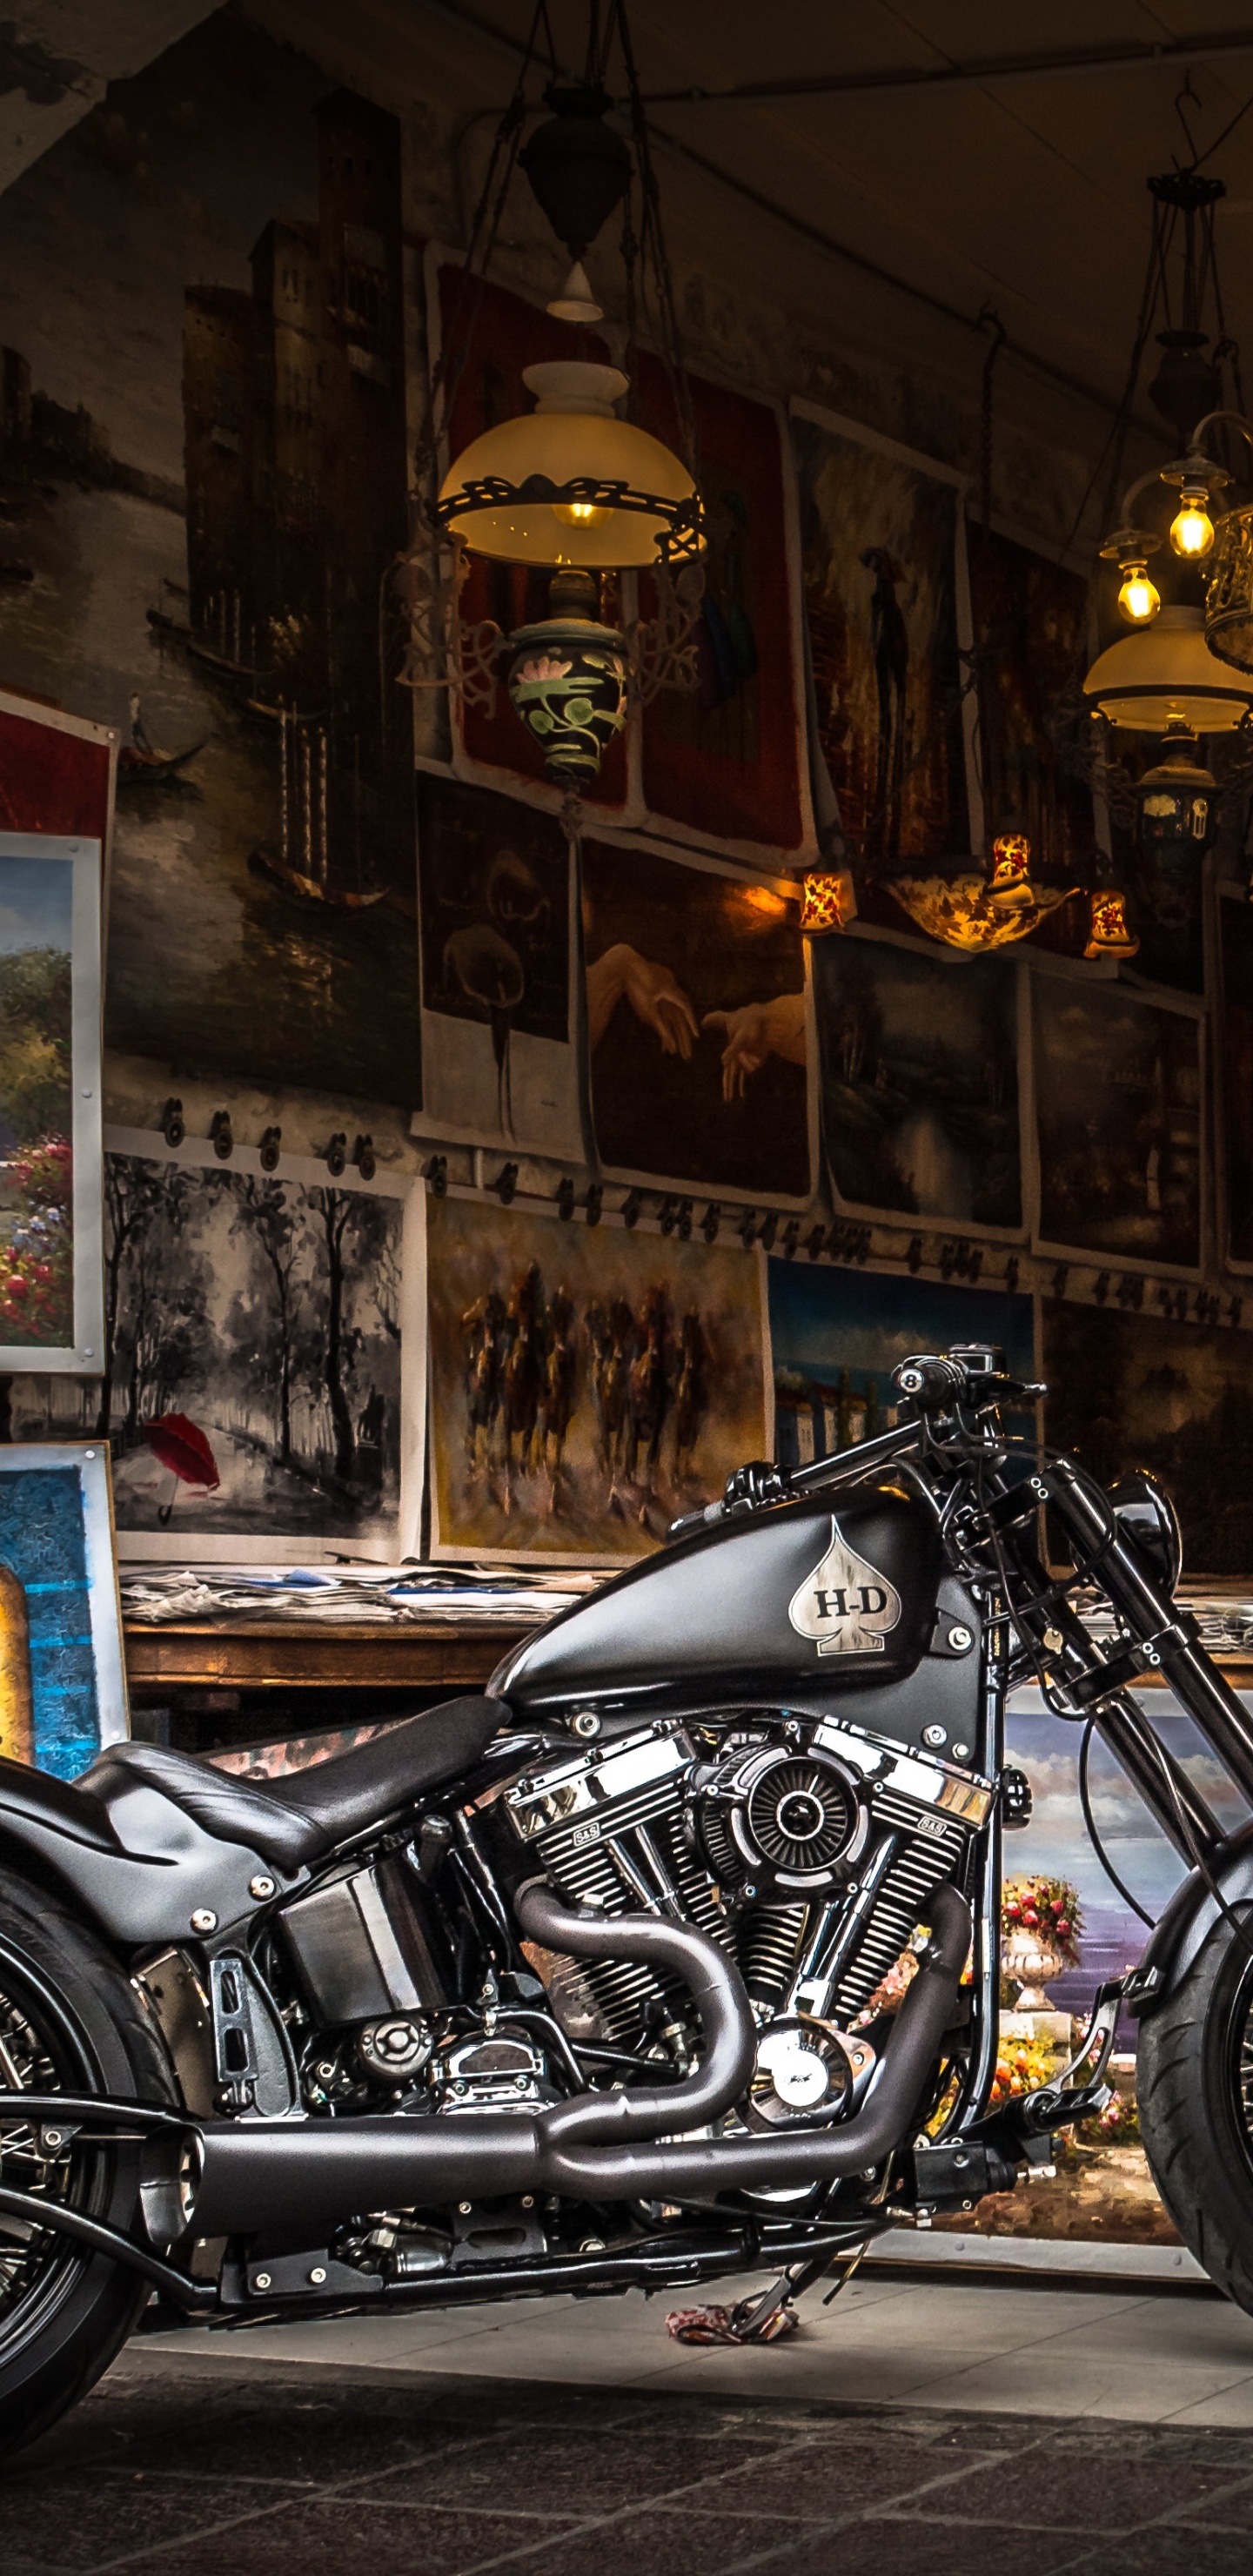 Motocicleta Cruiser Negra Estacionada Junto a la Tienda. Wallpaper in 1440x2960 Resolution